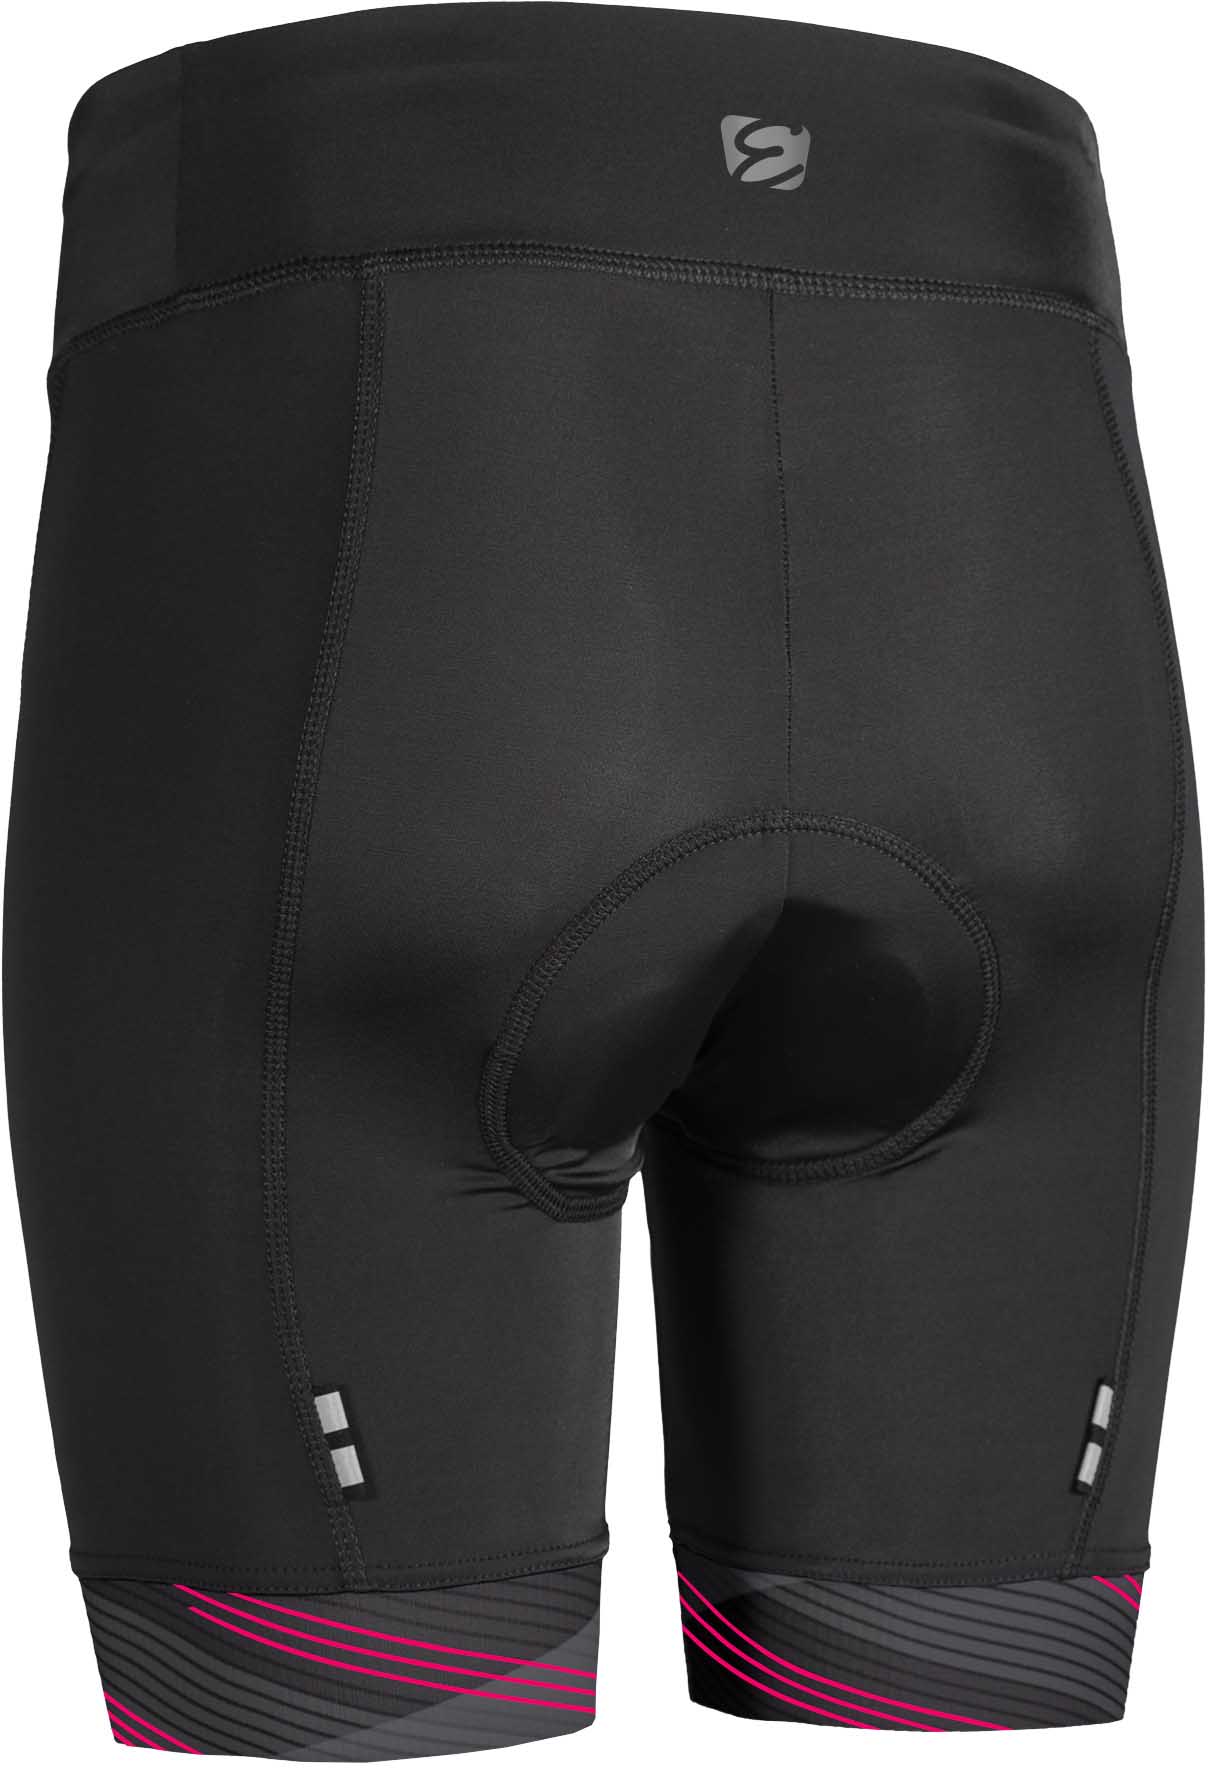 Women's bike pants